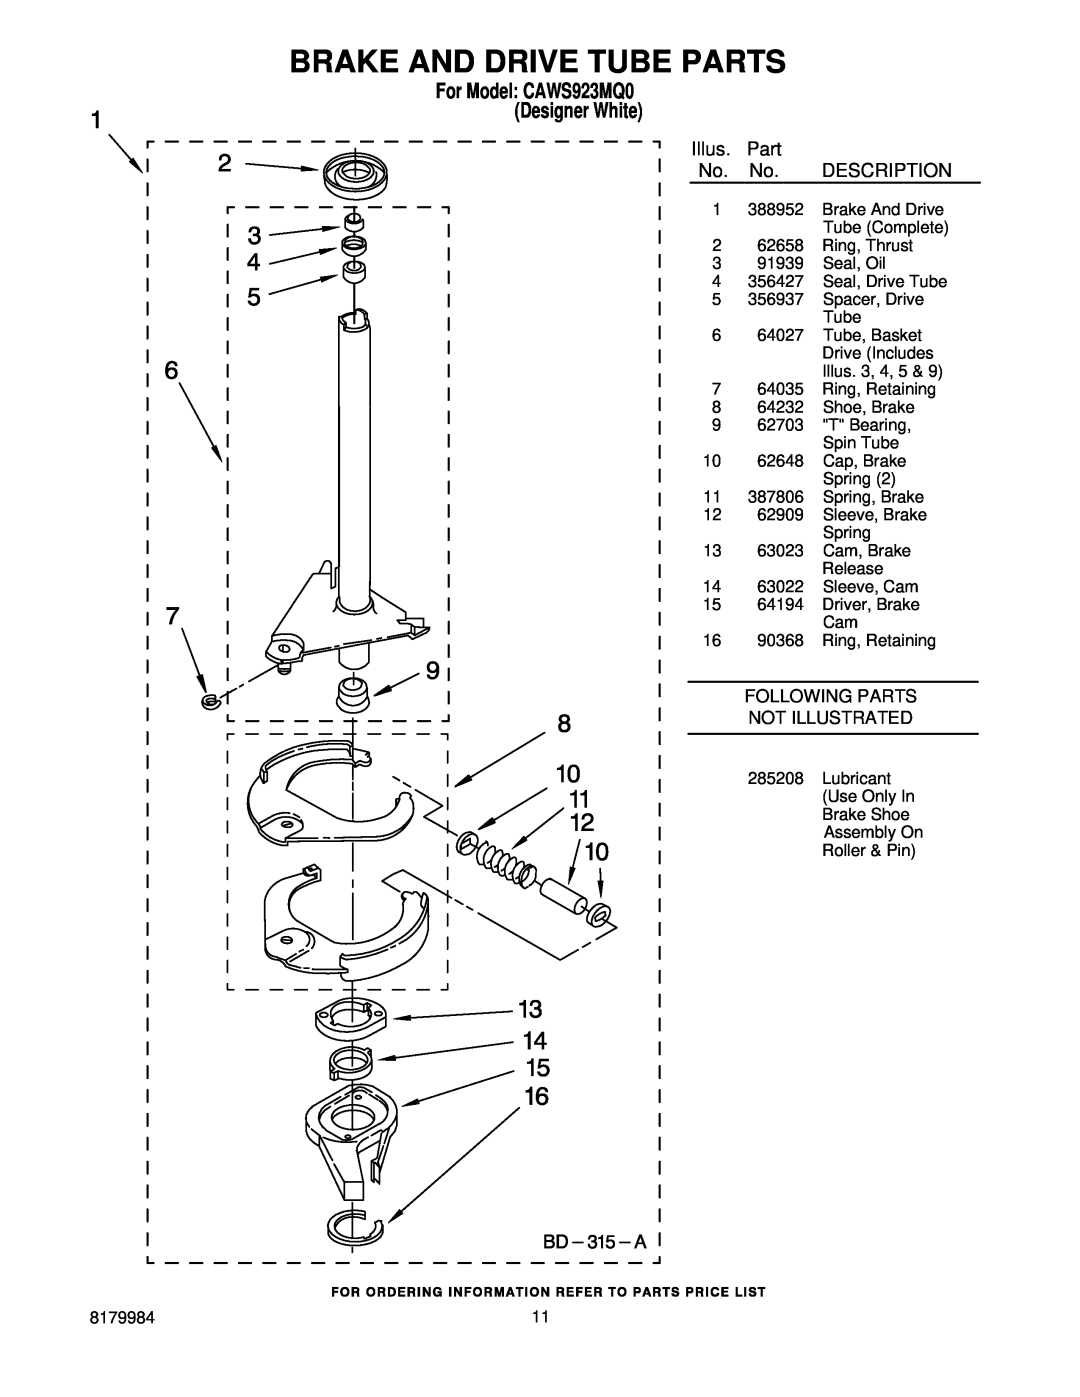 Crosley CAWS923MQ0 manual Brake And Drive Tube Parts, Description, Following Parts Not Illustrated 